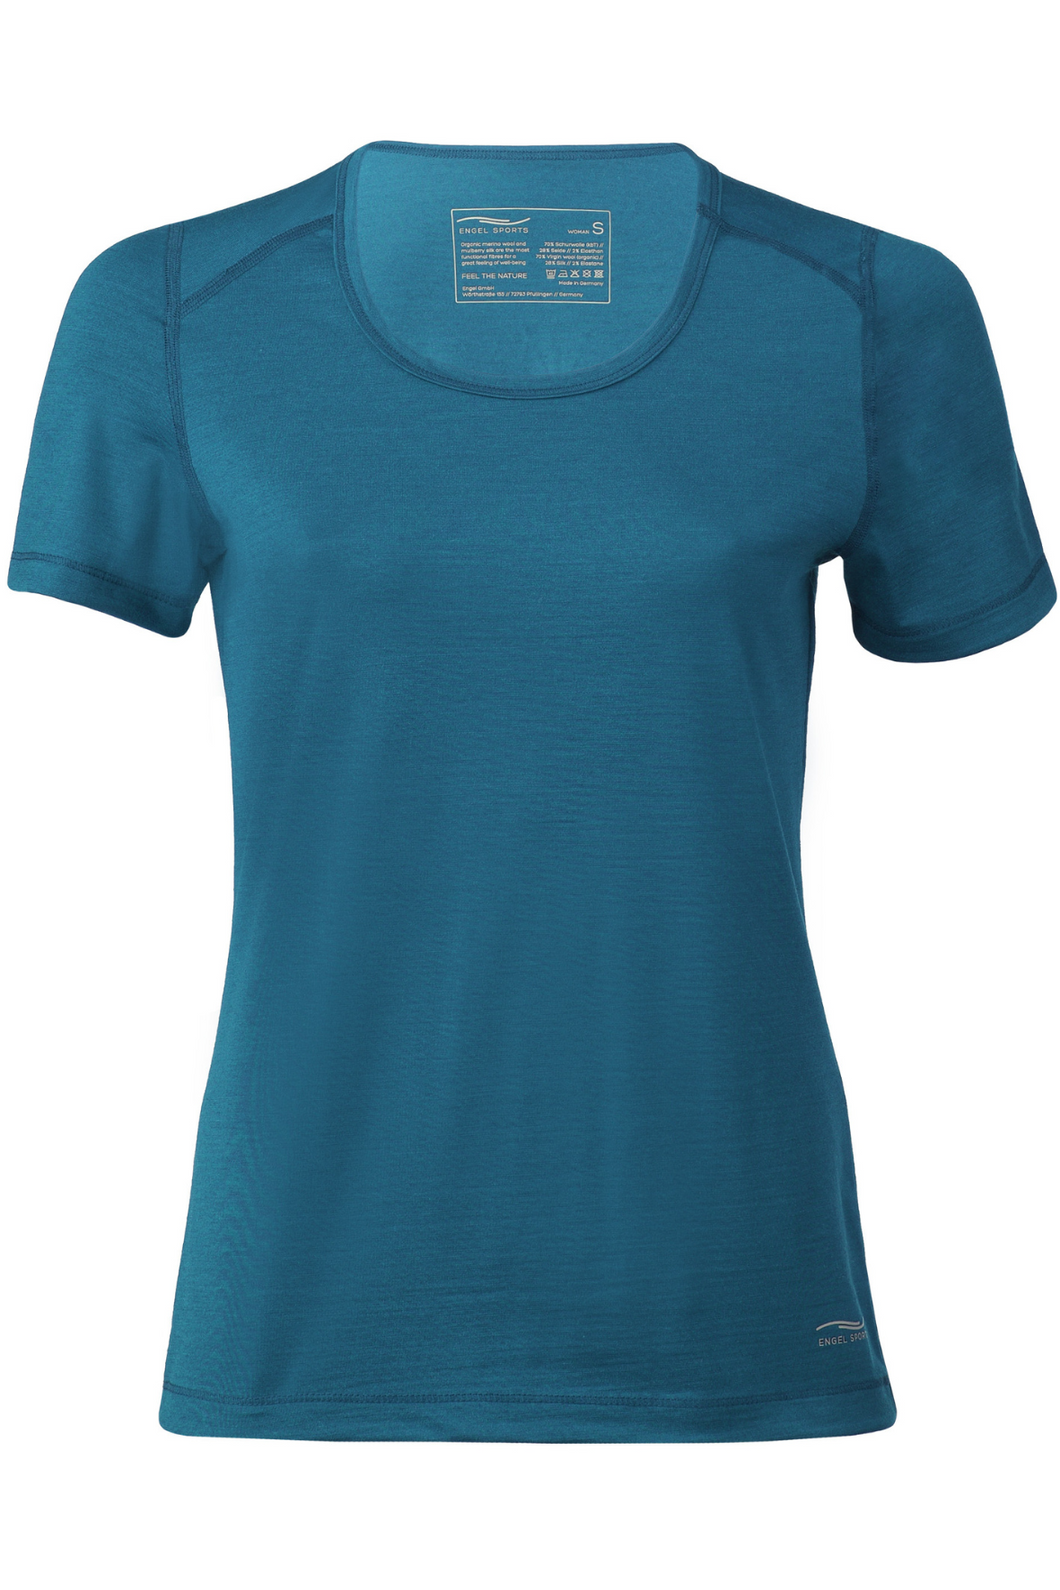 Engel Women Eco Sport T-Shirt, Merino Wool/Silk